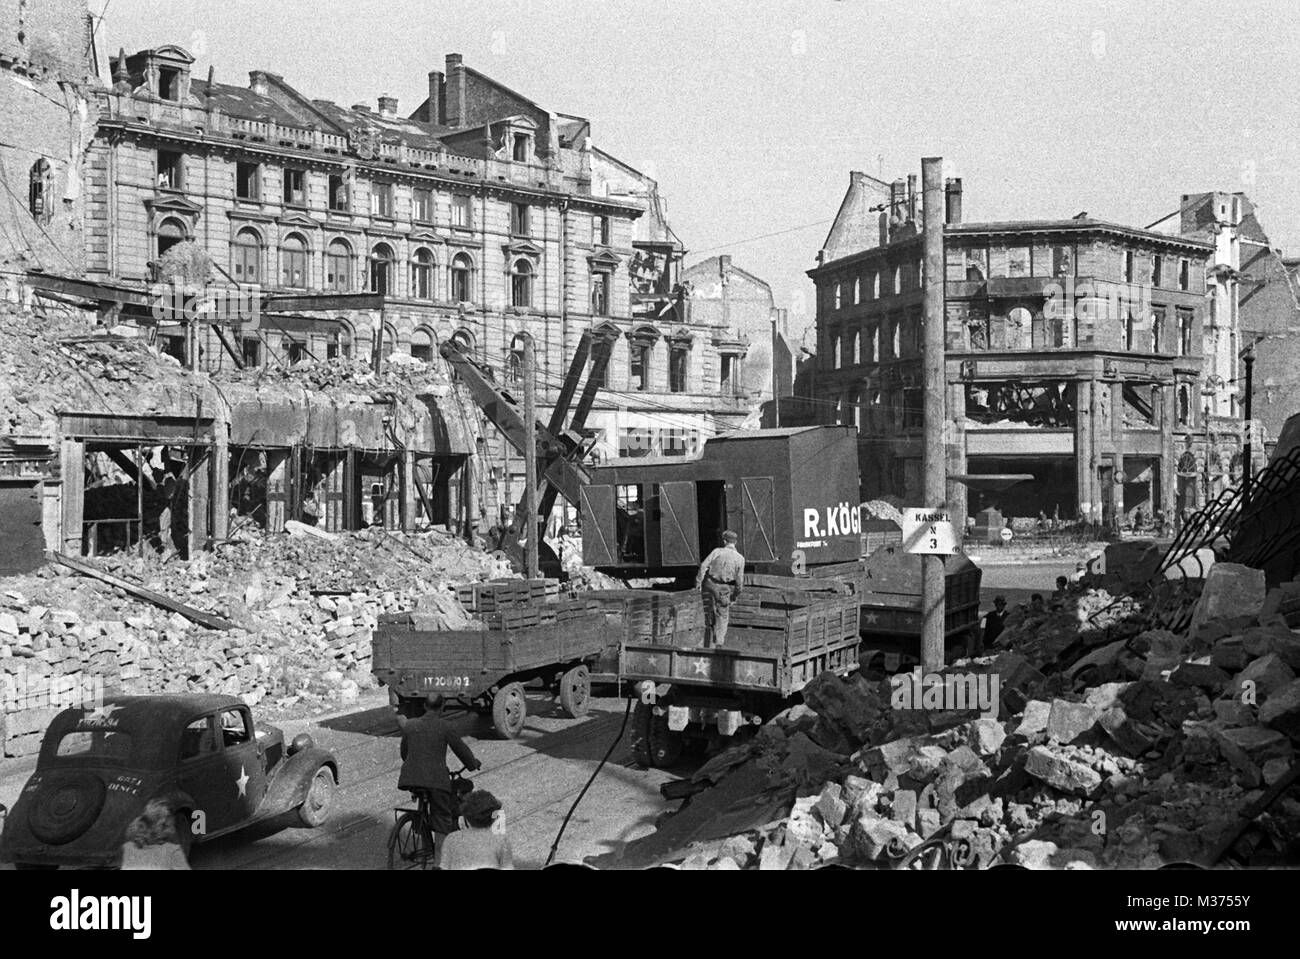 rubble-clearance-on-kaiserplatz-in-frankfurt-on-the-main-on-12-september-M3755Y.jpg